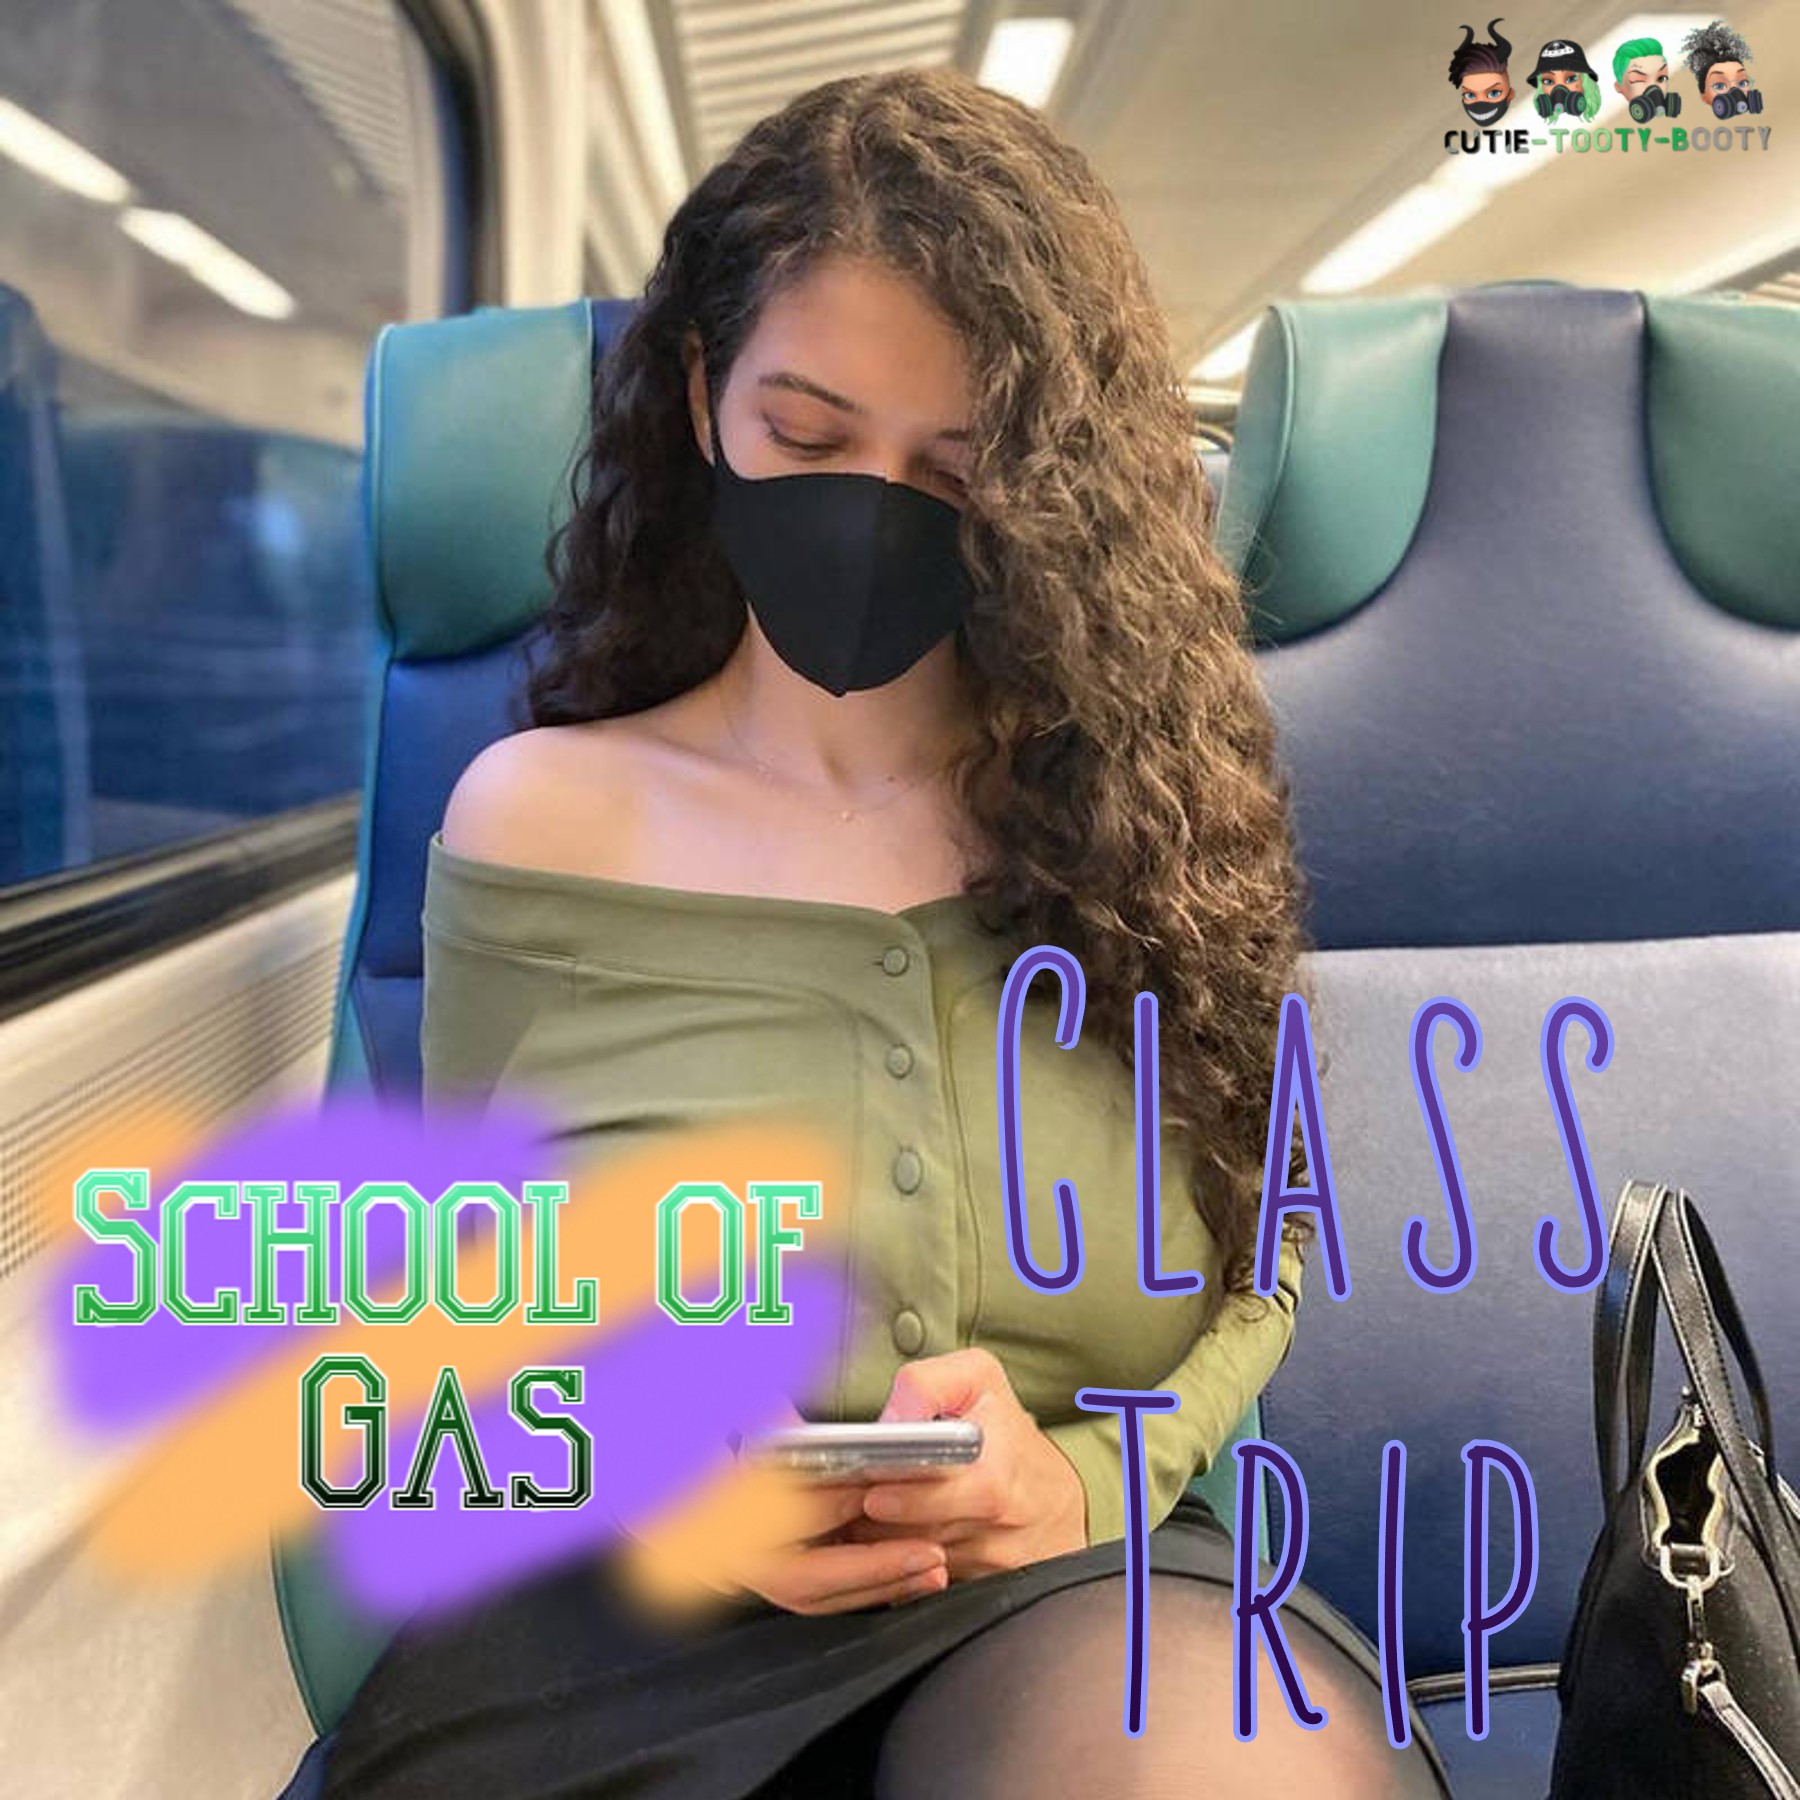 School of Gas: Class Trip